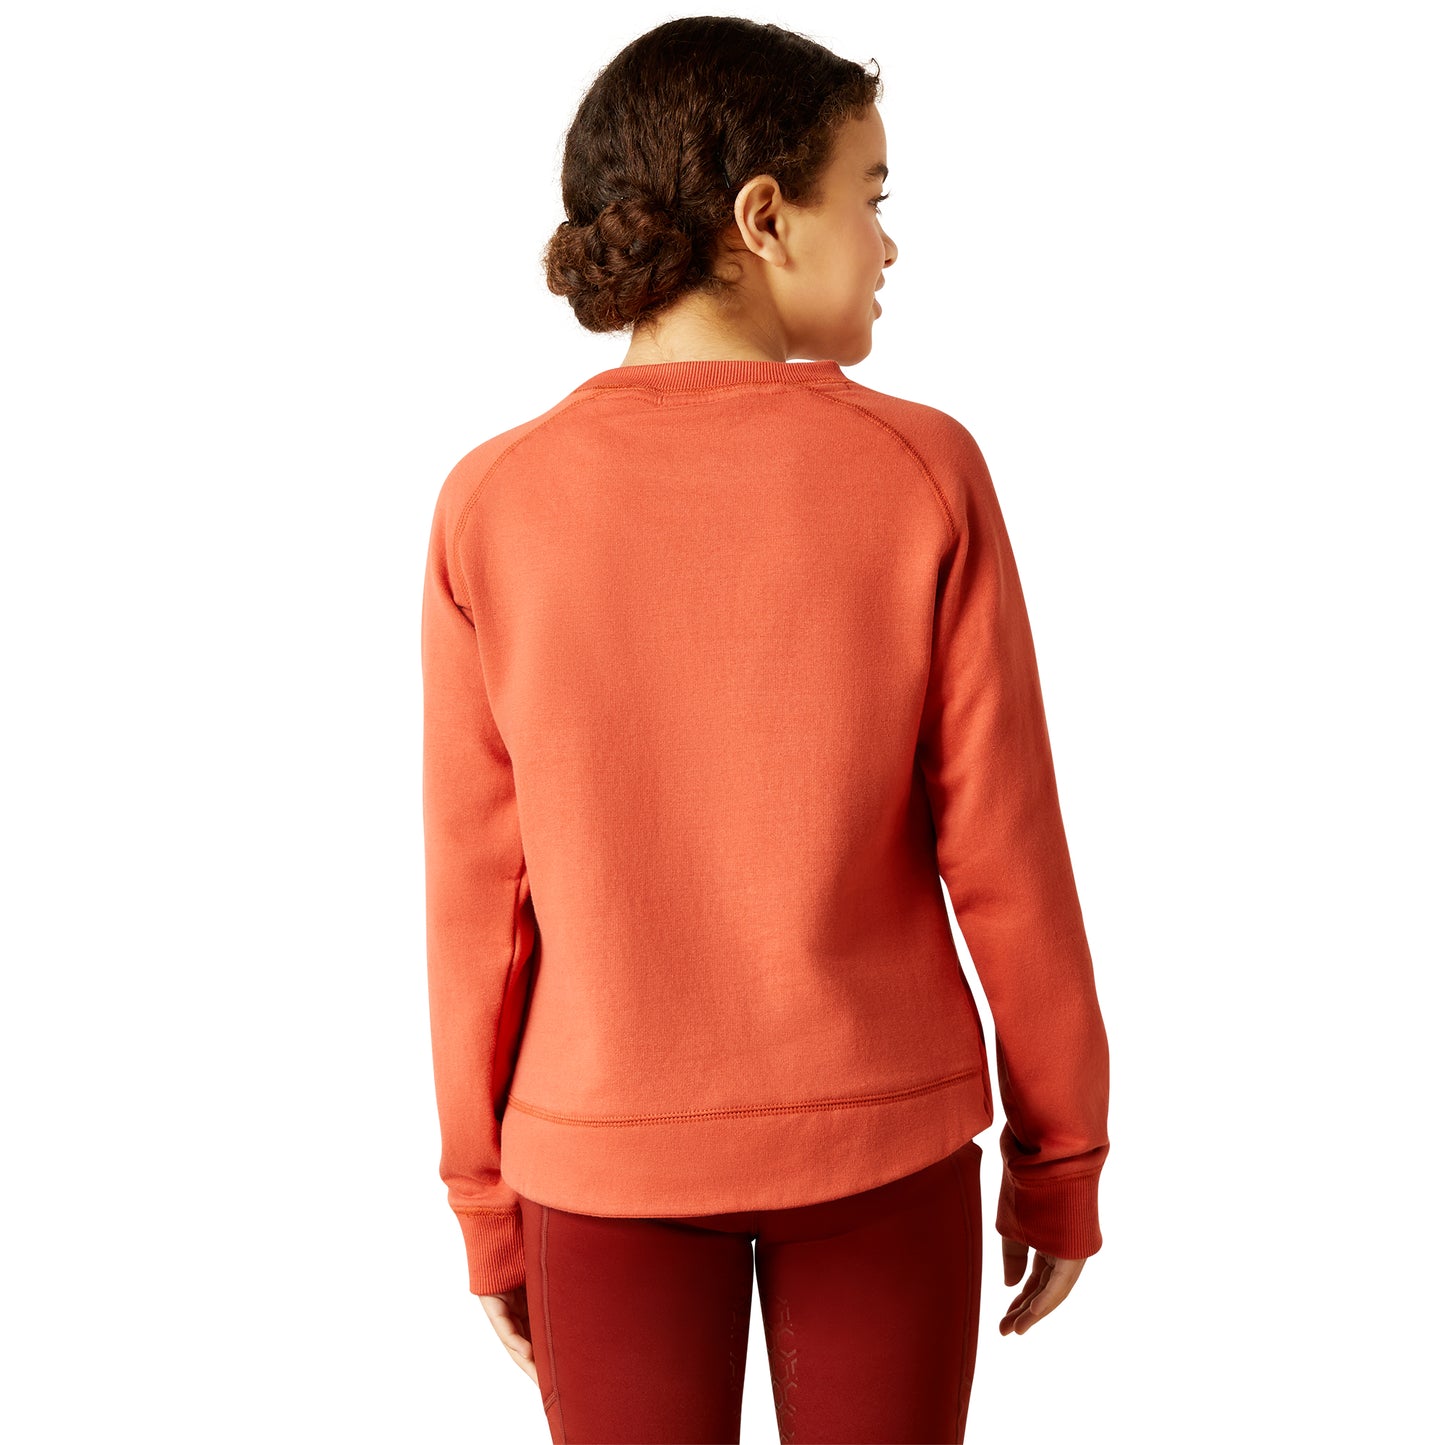 Ariat Youth Girl's Benicia Burnt Orange Sweatshirt 10046333